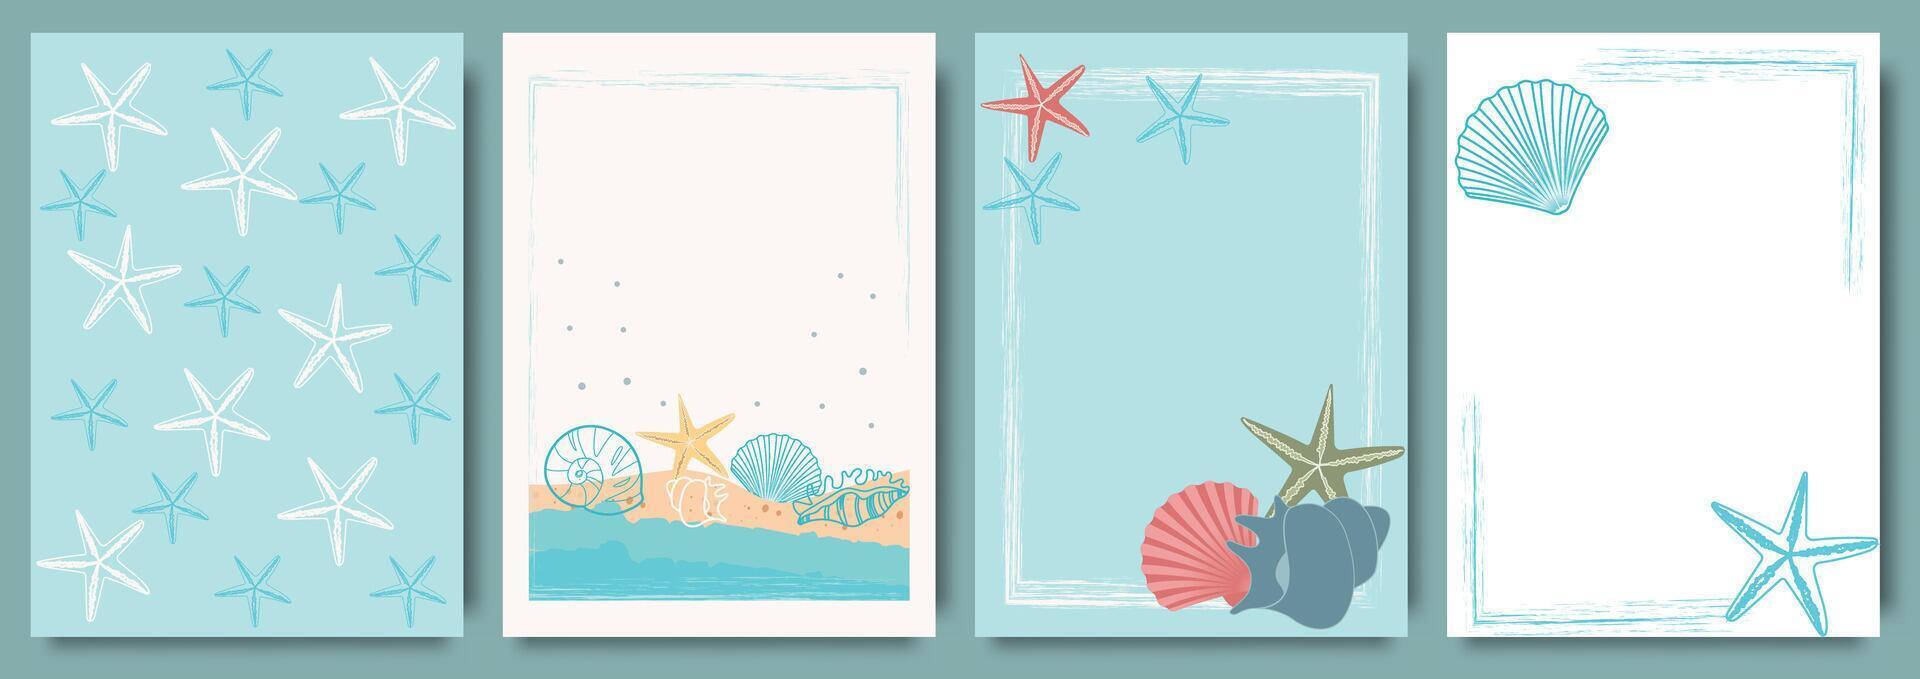 Geometric square summer frame with seashells. Summer holiday background, seamless pattern, frame. Vector illustration of waves, birds, seashells, starfish, water splashes